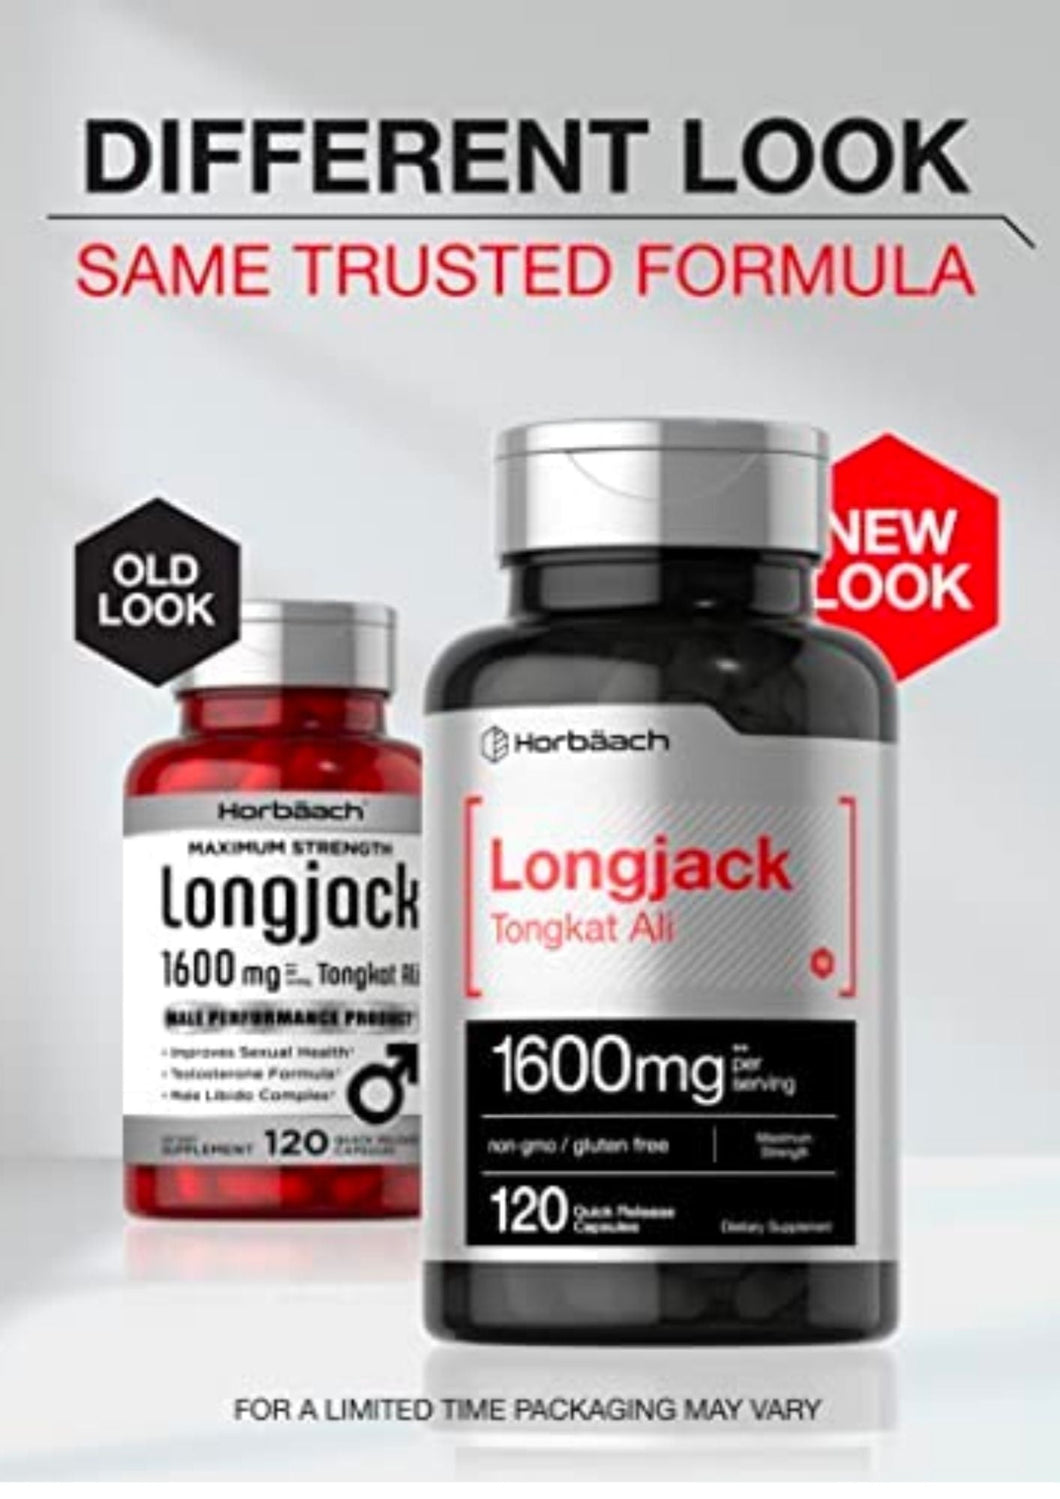 Longjack Tongkat Ali 1600 mg General SUPPS247 120 cap 